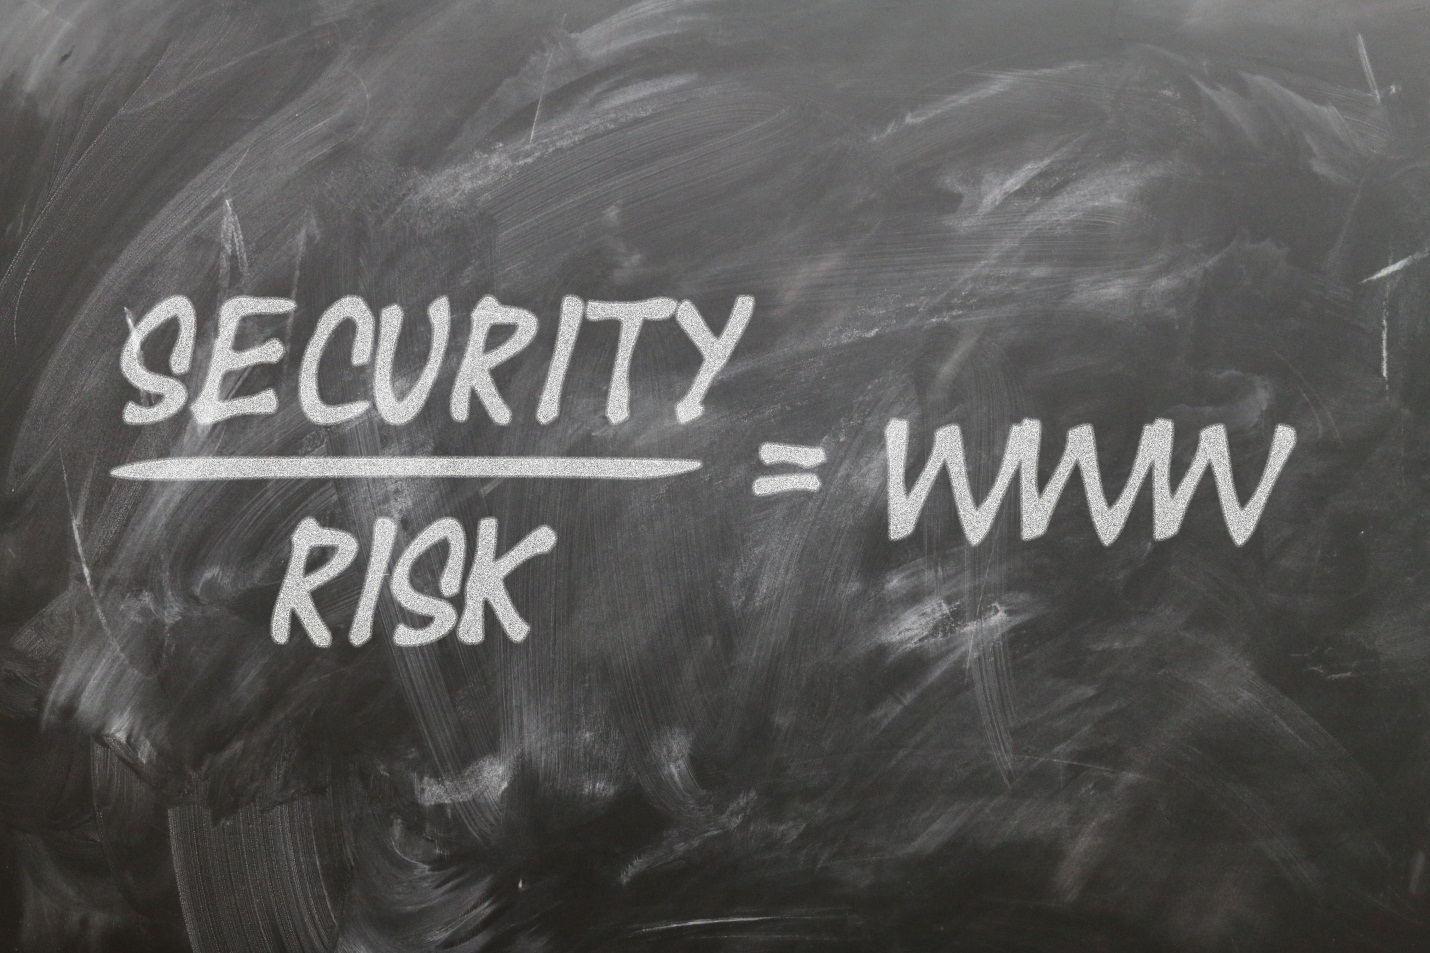 Internet = Security / Risk